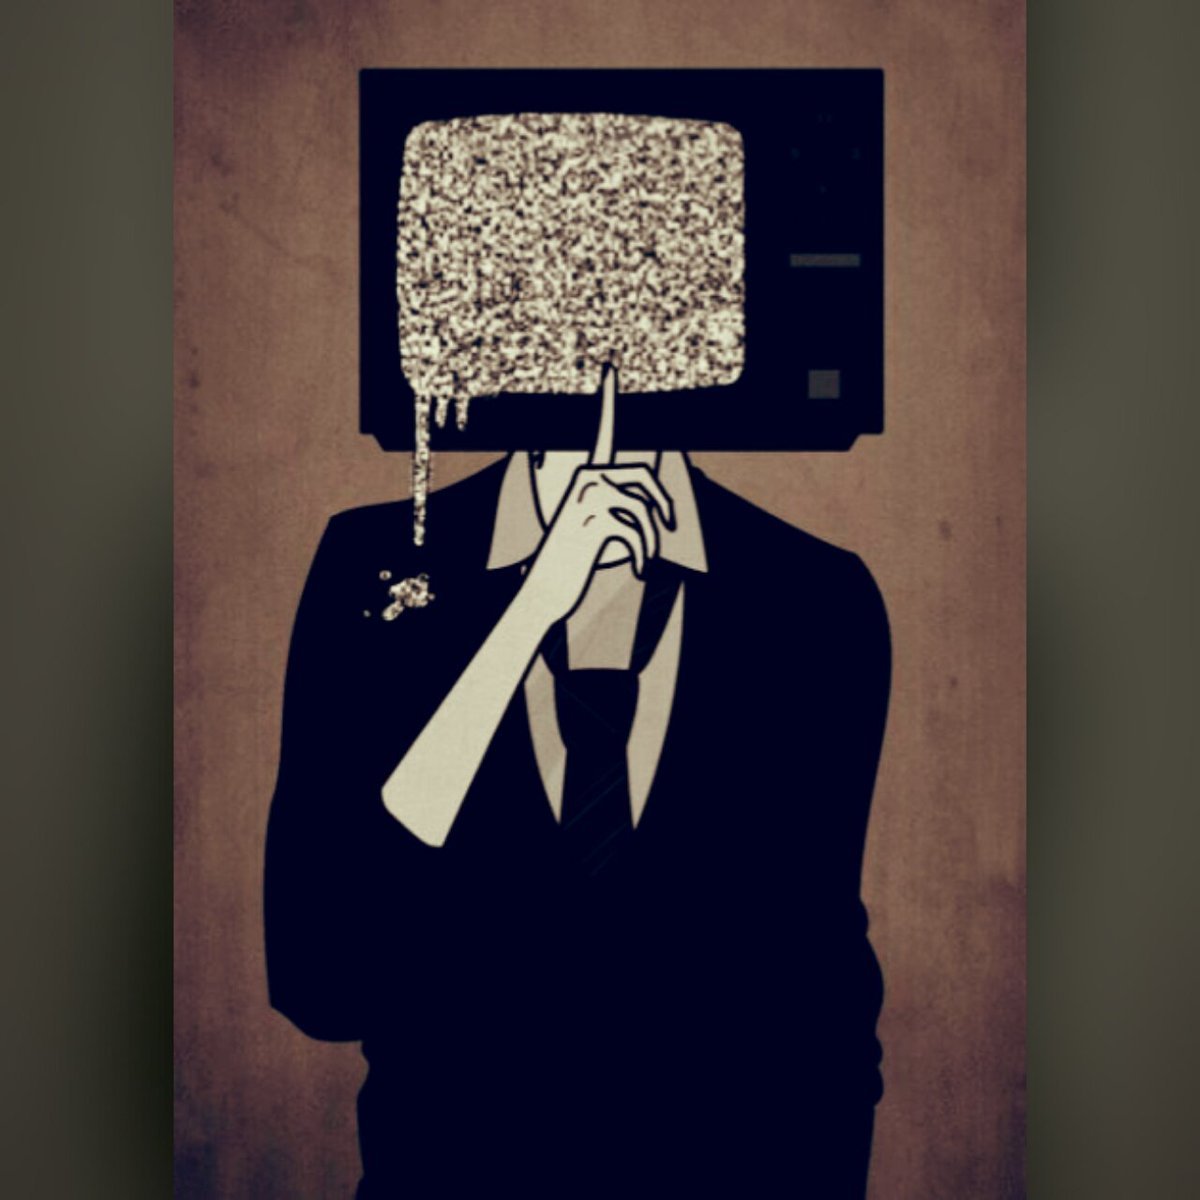 Картинка тв мене. Человек с телевизором вместо головы. Пакет на голове арт. Человек с телевизором вместо головы арт. Телевизоры вместо голов.